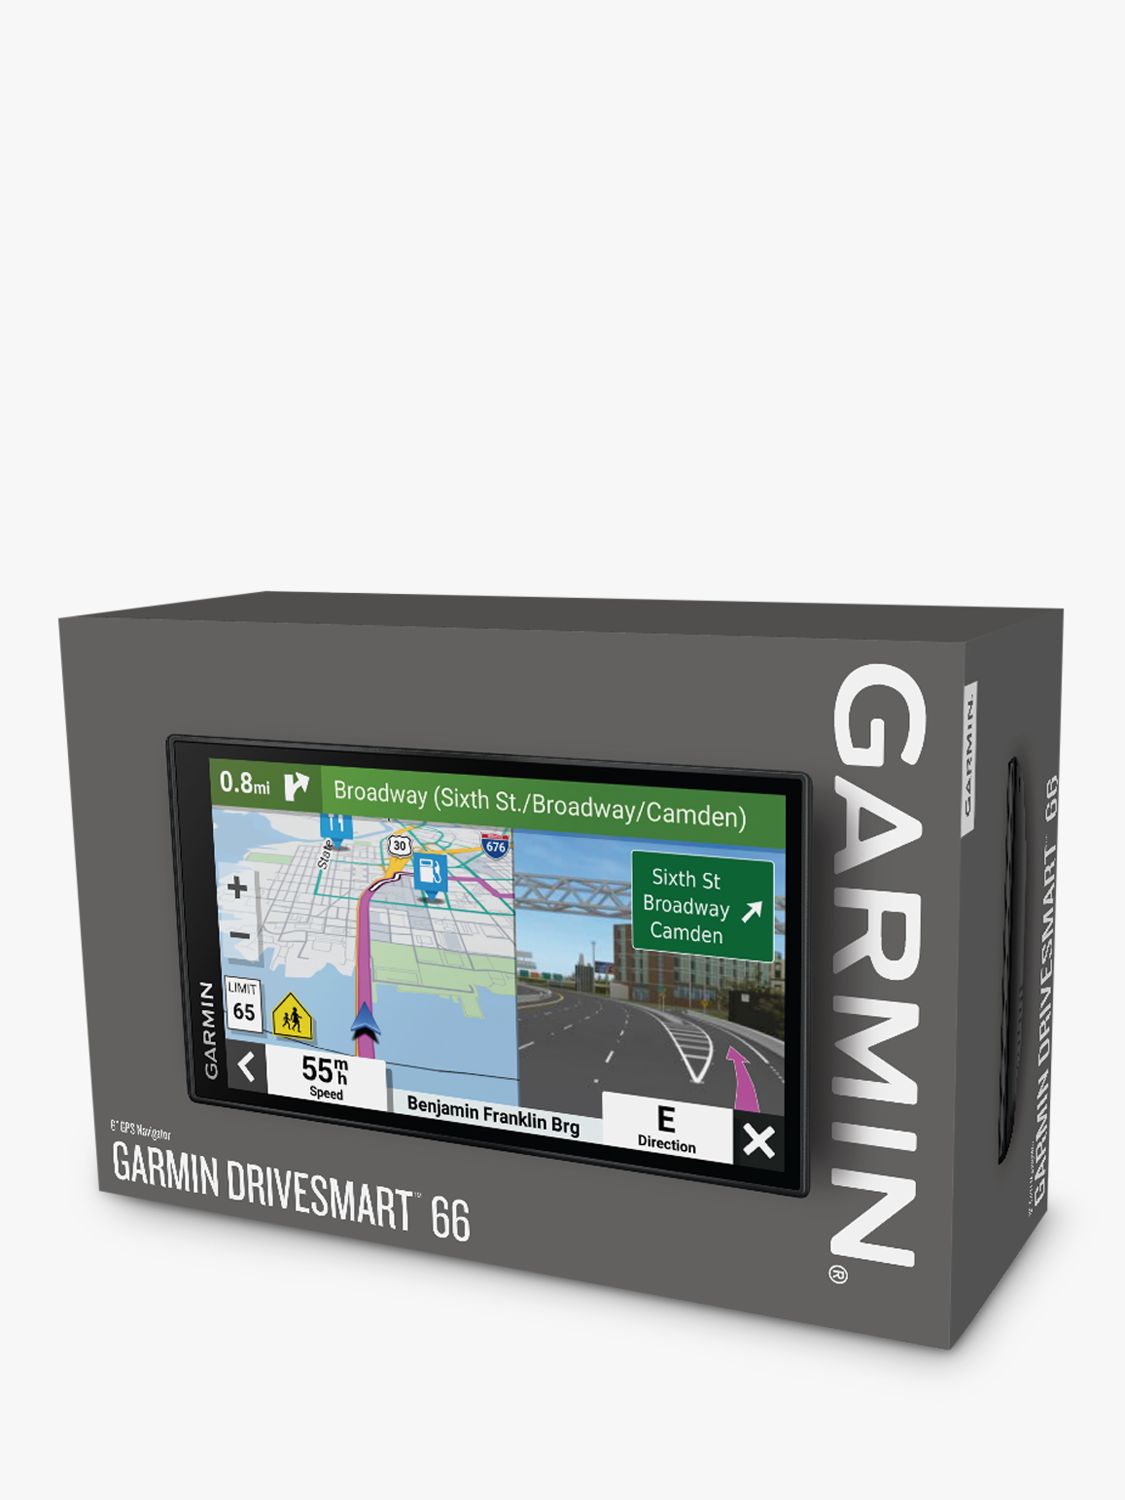 Garmin DriveSmart 66 Sat Nav with Bluetooth, 6